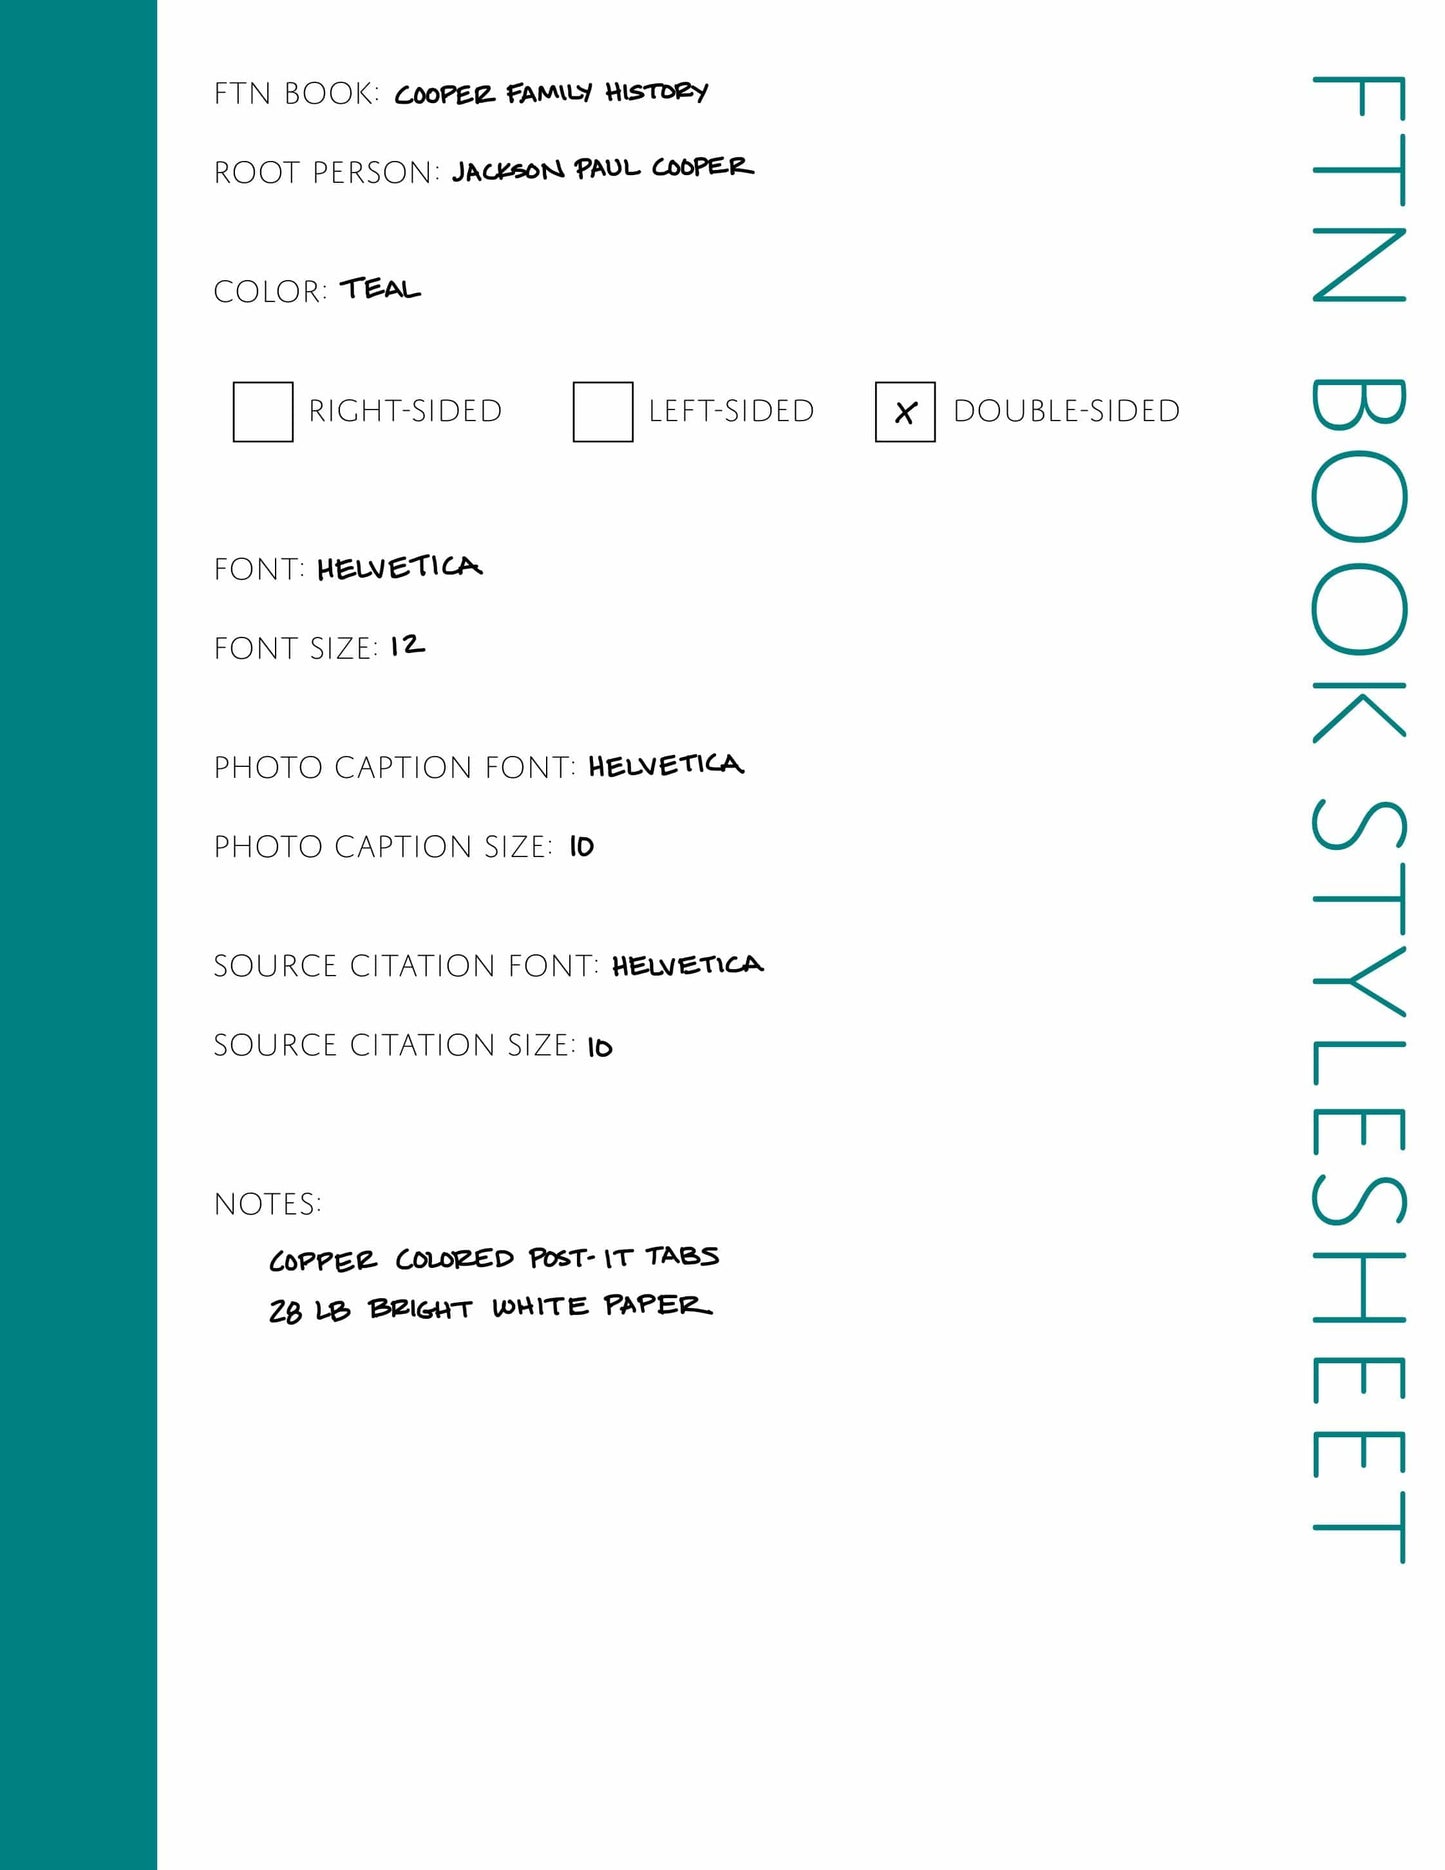 FTN Book Stylesheet: Printable Form (Digital Download)